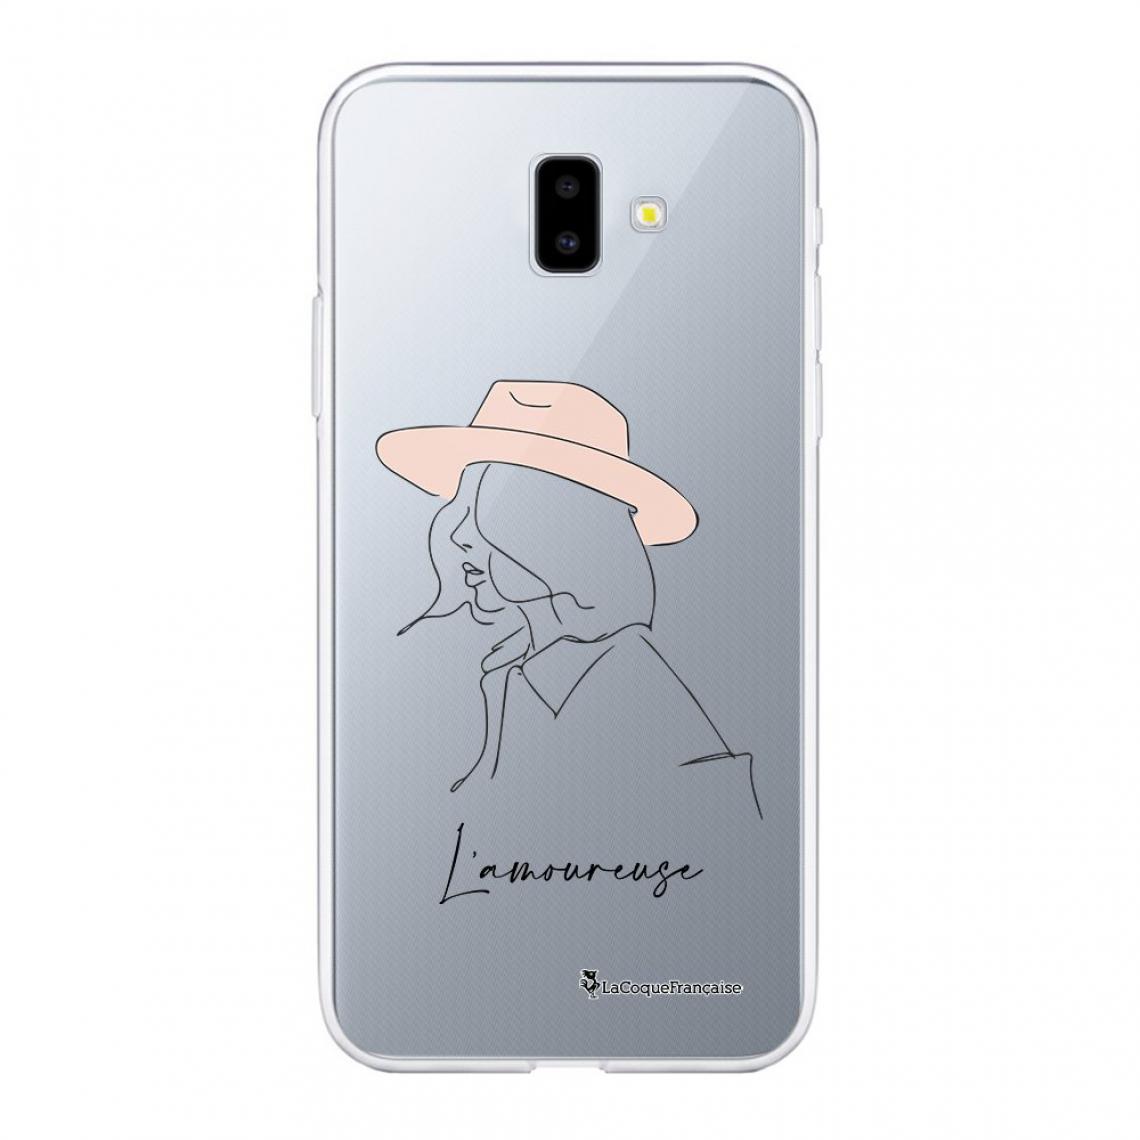 La Coque Francaise - Coque Samsung Galaxy J6 PLUS 2018 souple silicone transparente - Coque, étui smartphone